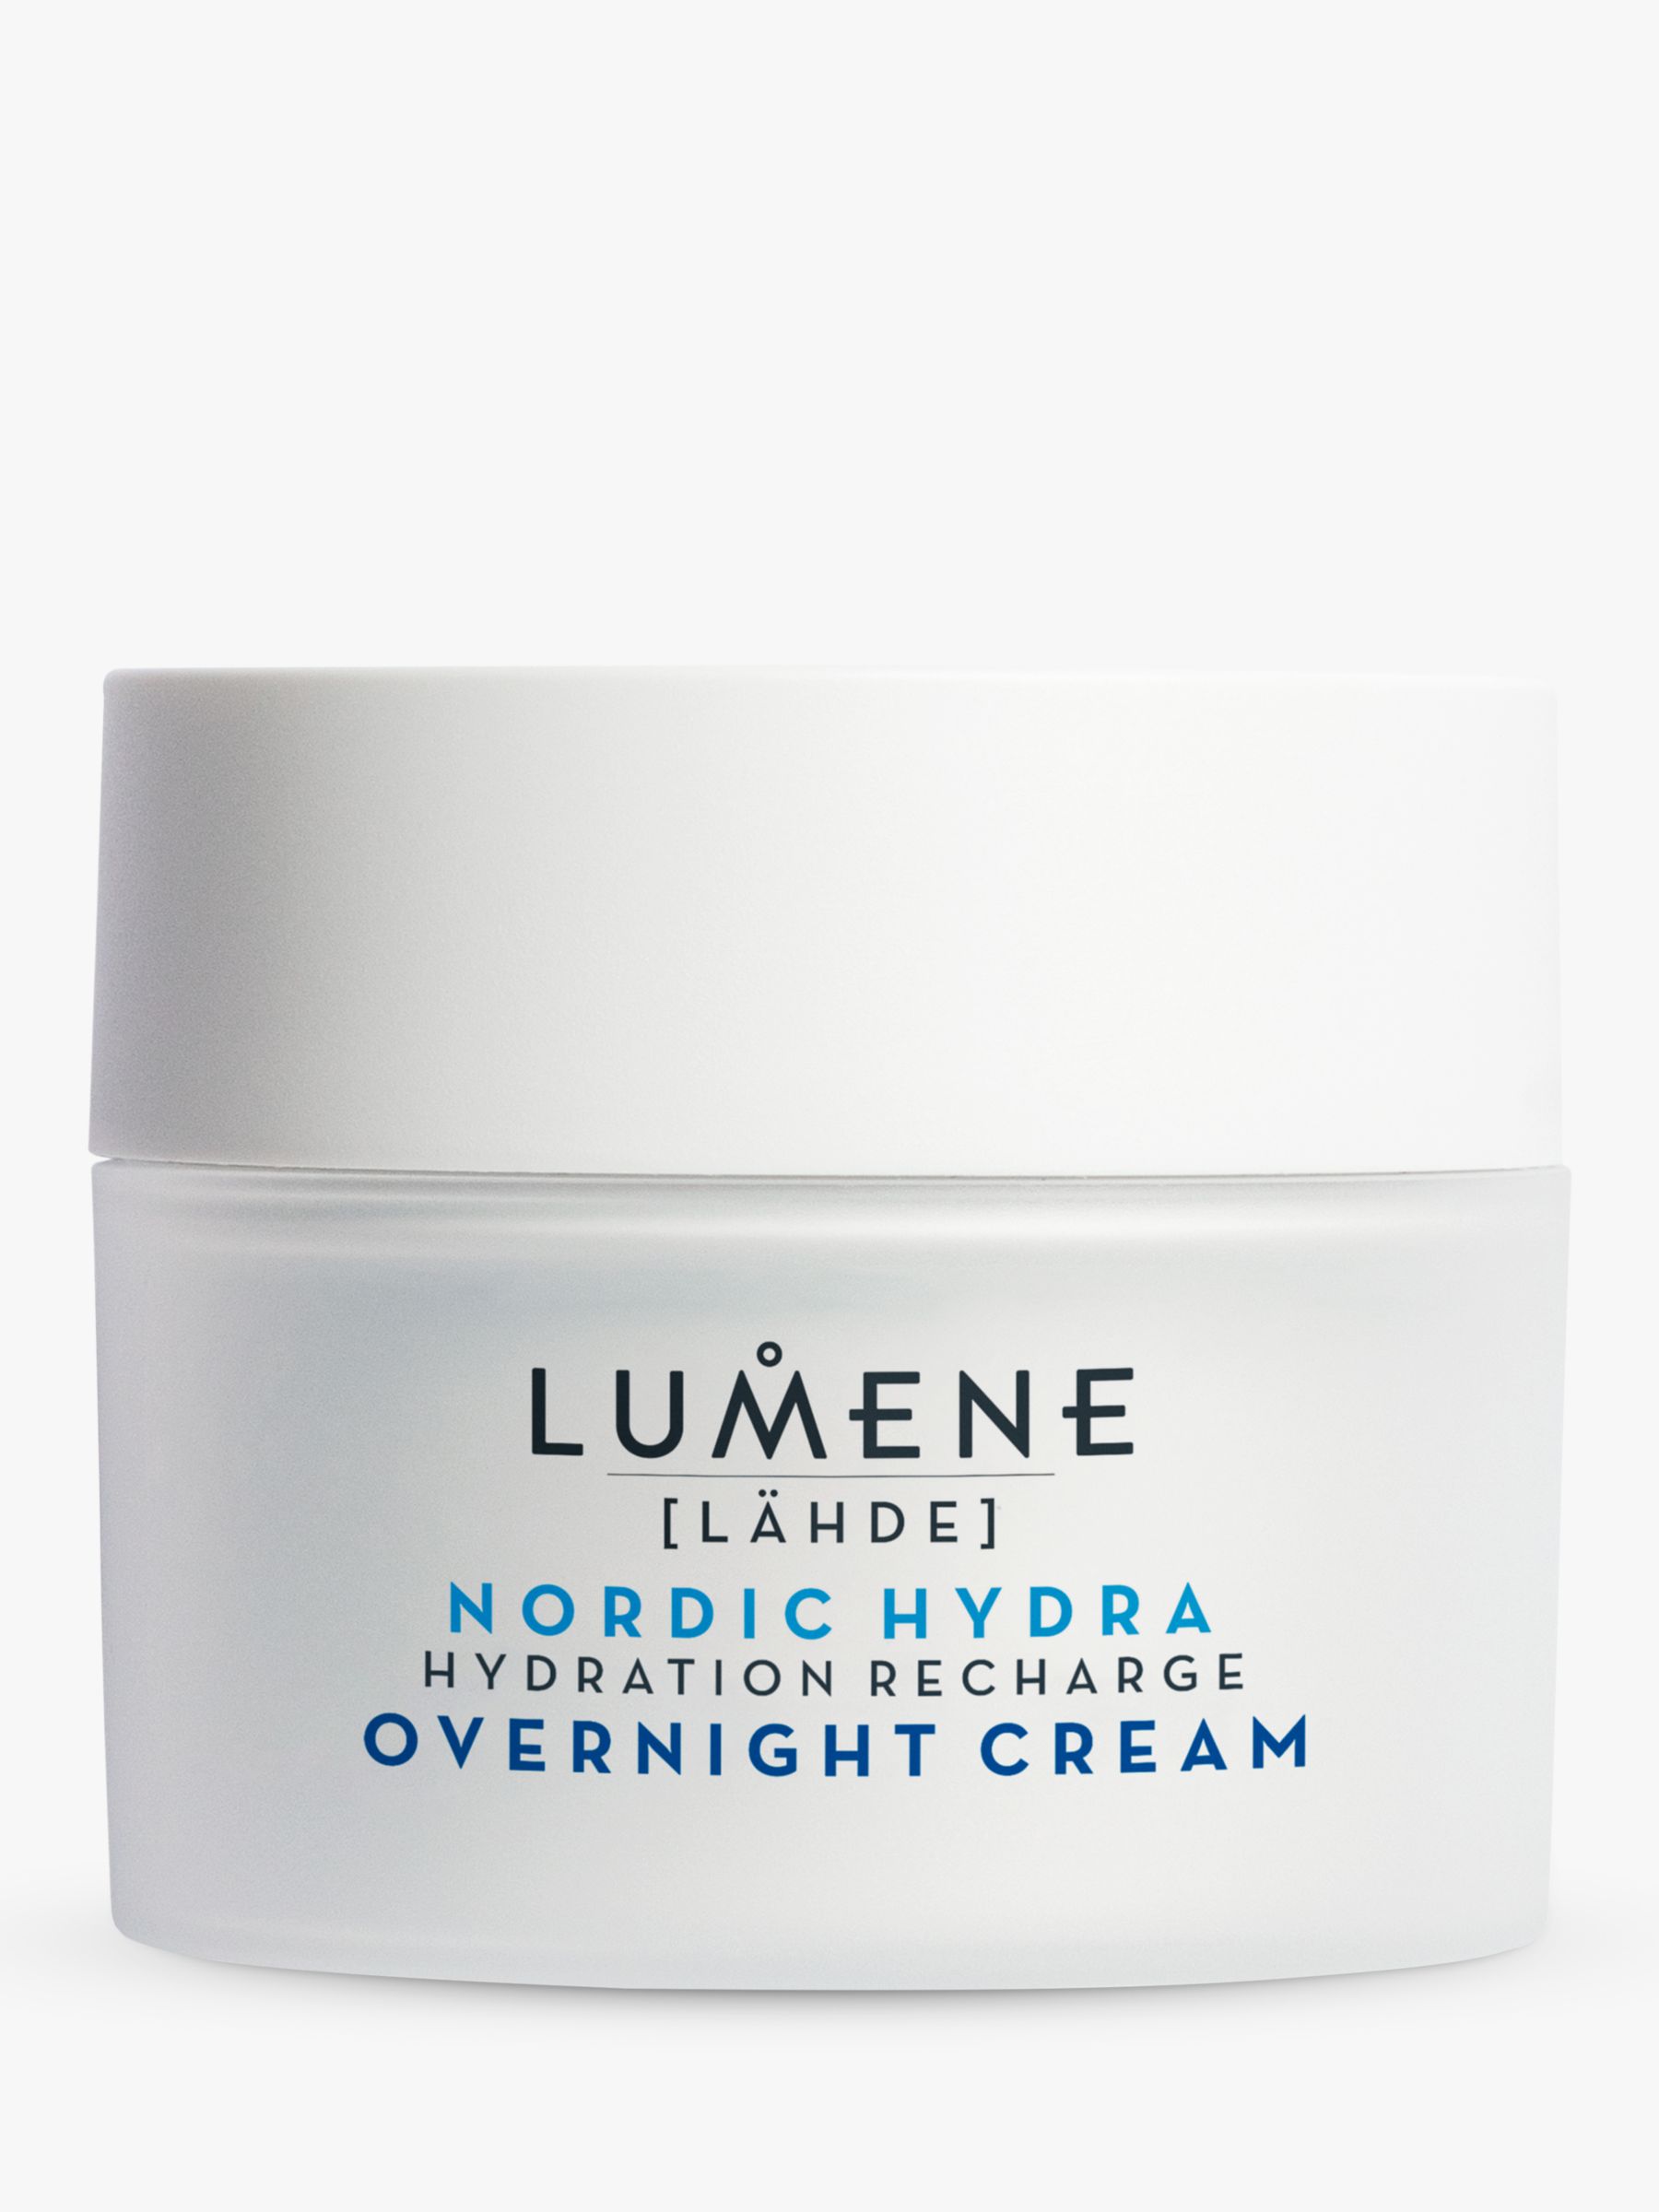 Lumene Nordic Hydra Hydration Recharge Overnight Cream, 50ml 1